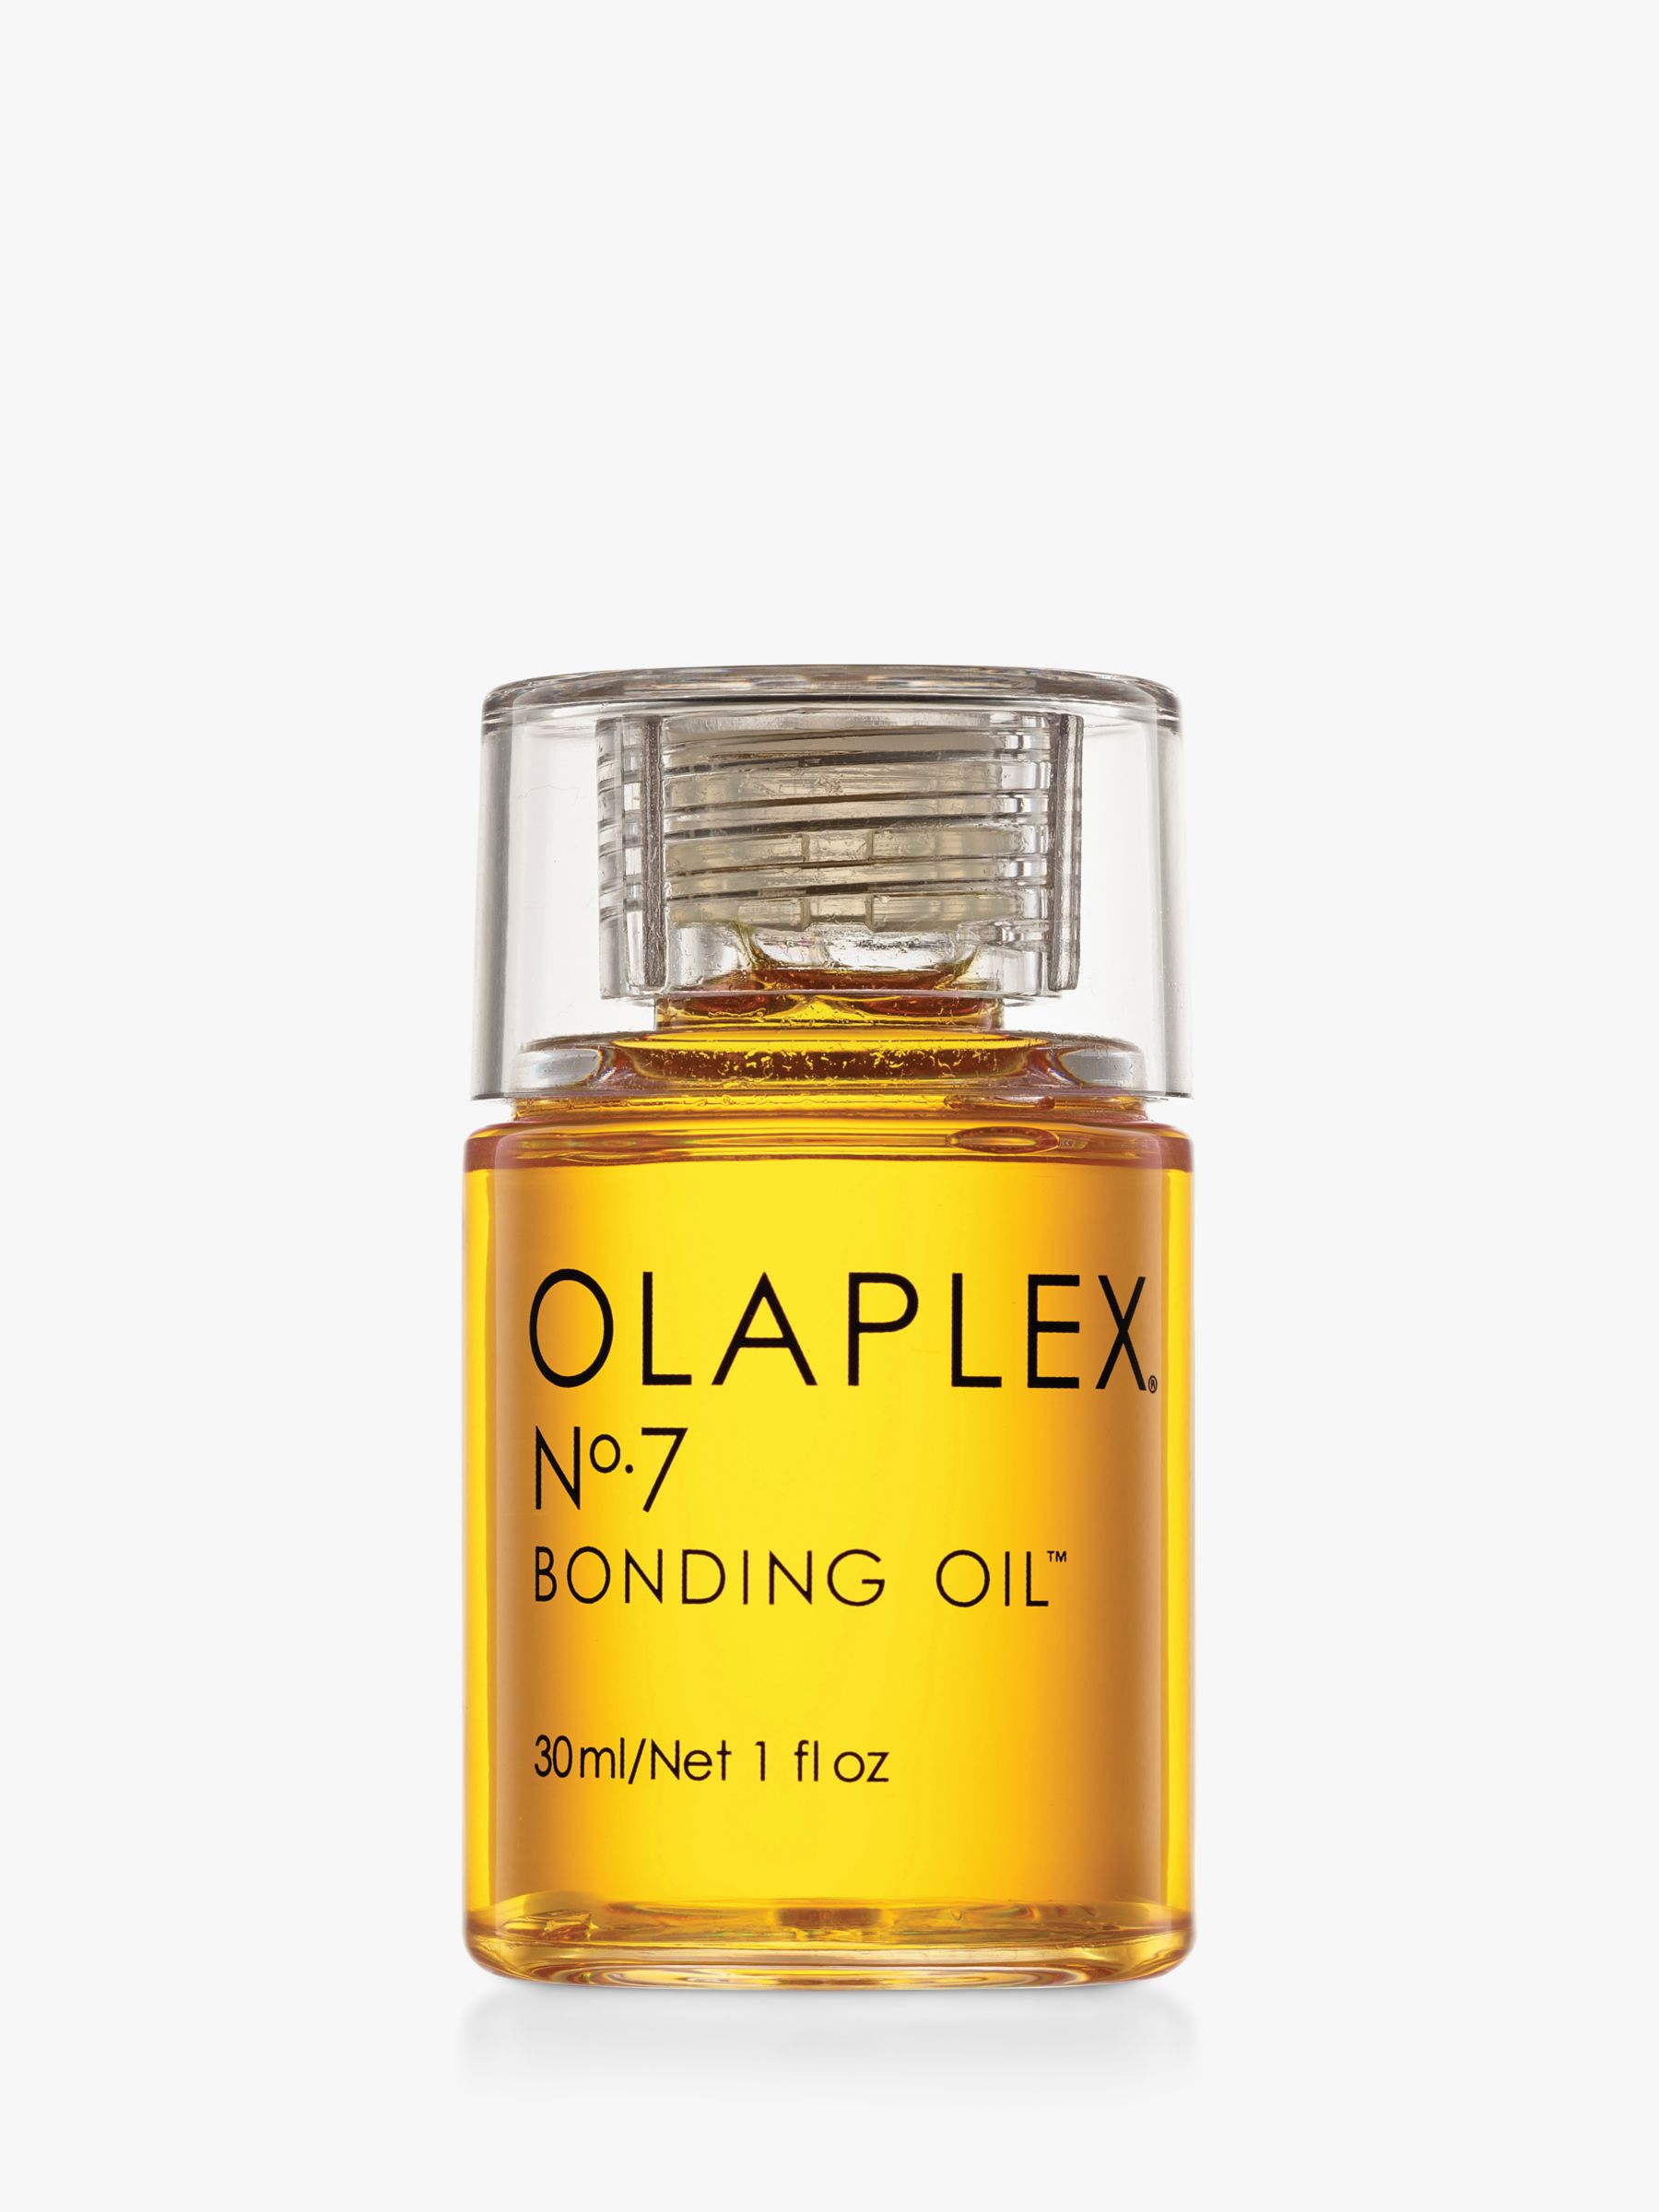 Olaplex No.7 Bonding Oil, 30ml 1